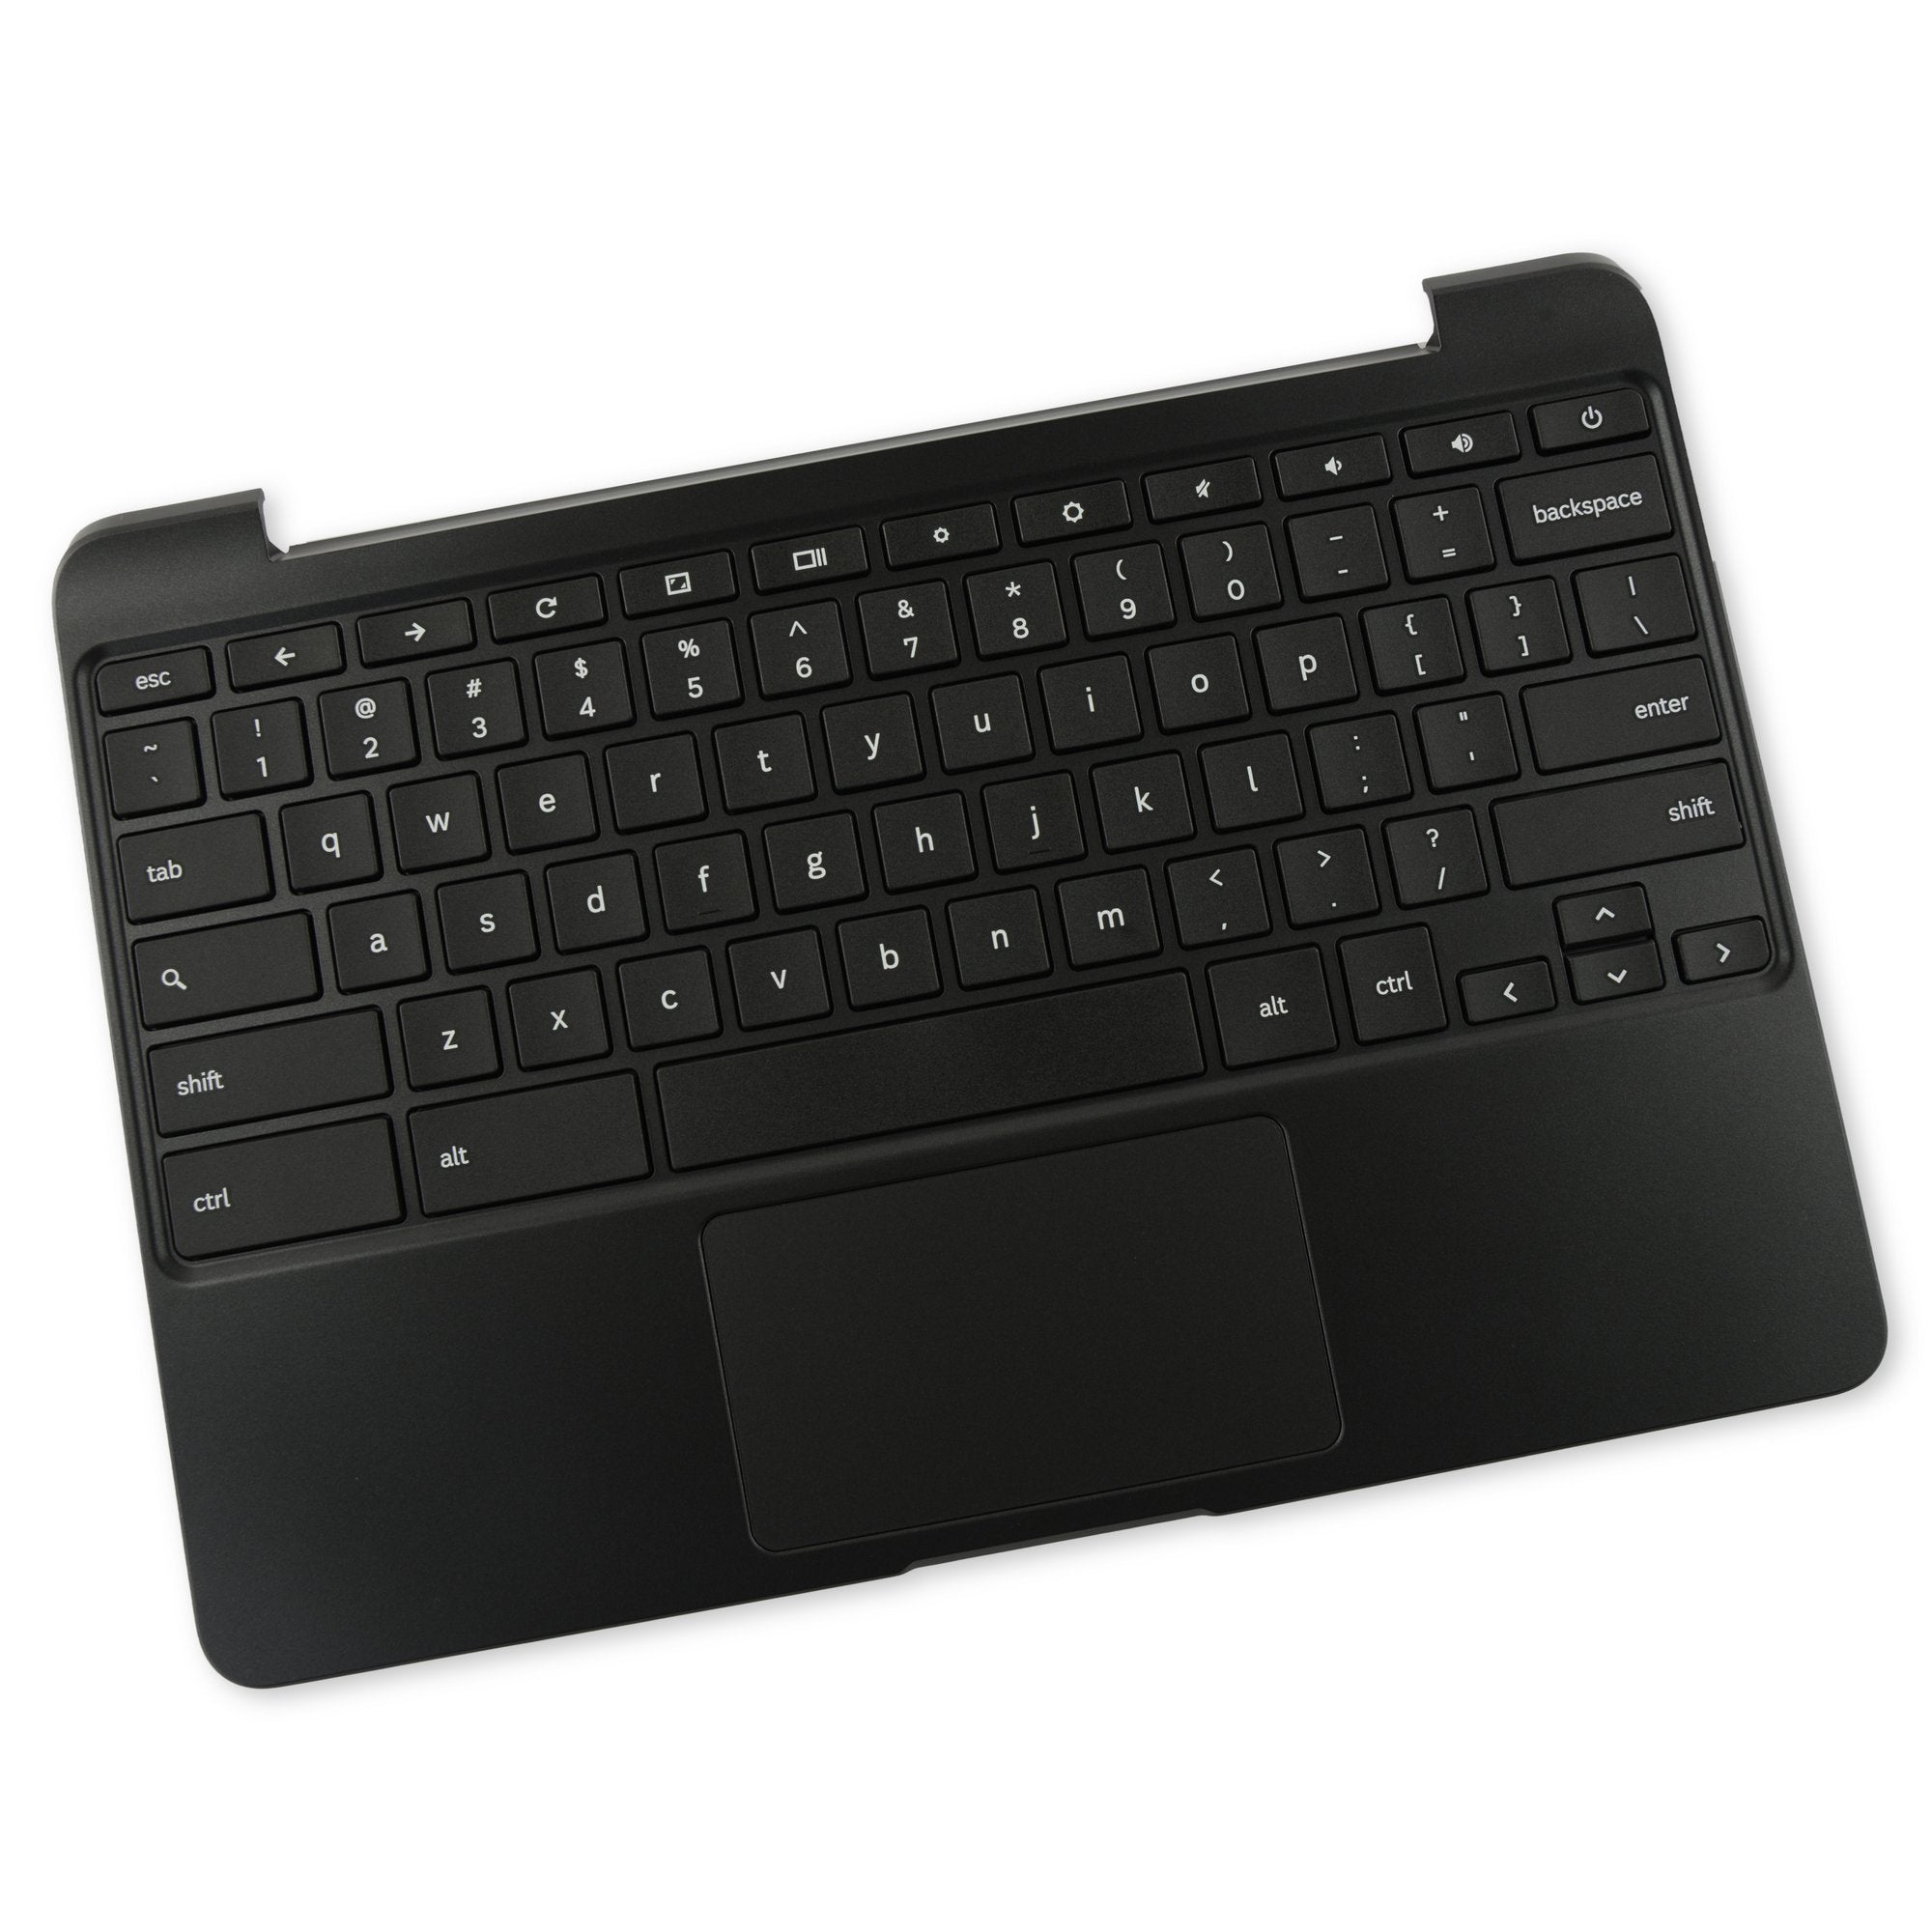 Samsung Chromebook XE500C13 Palmrest Keyboard Touchpad Assembly